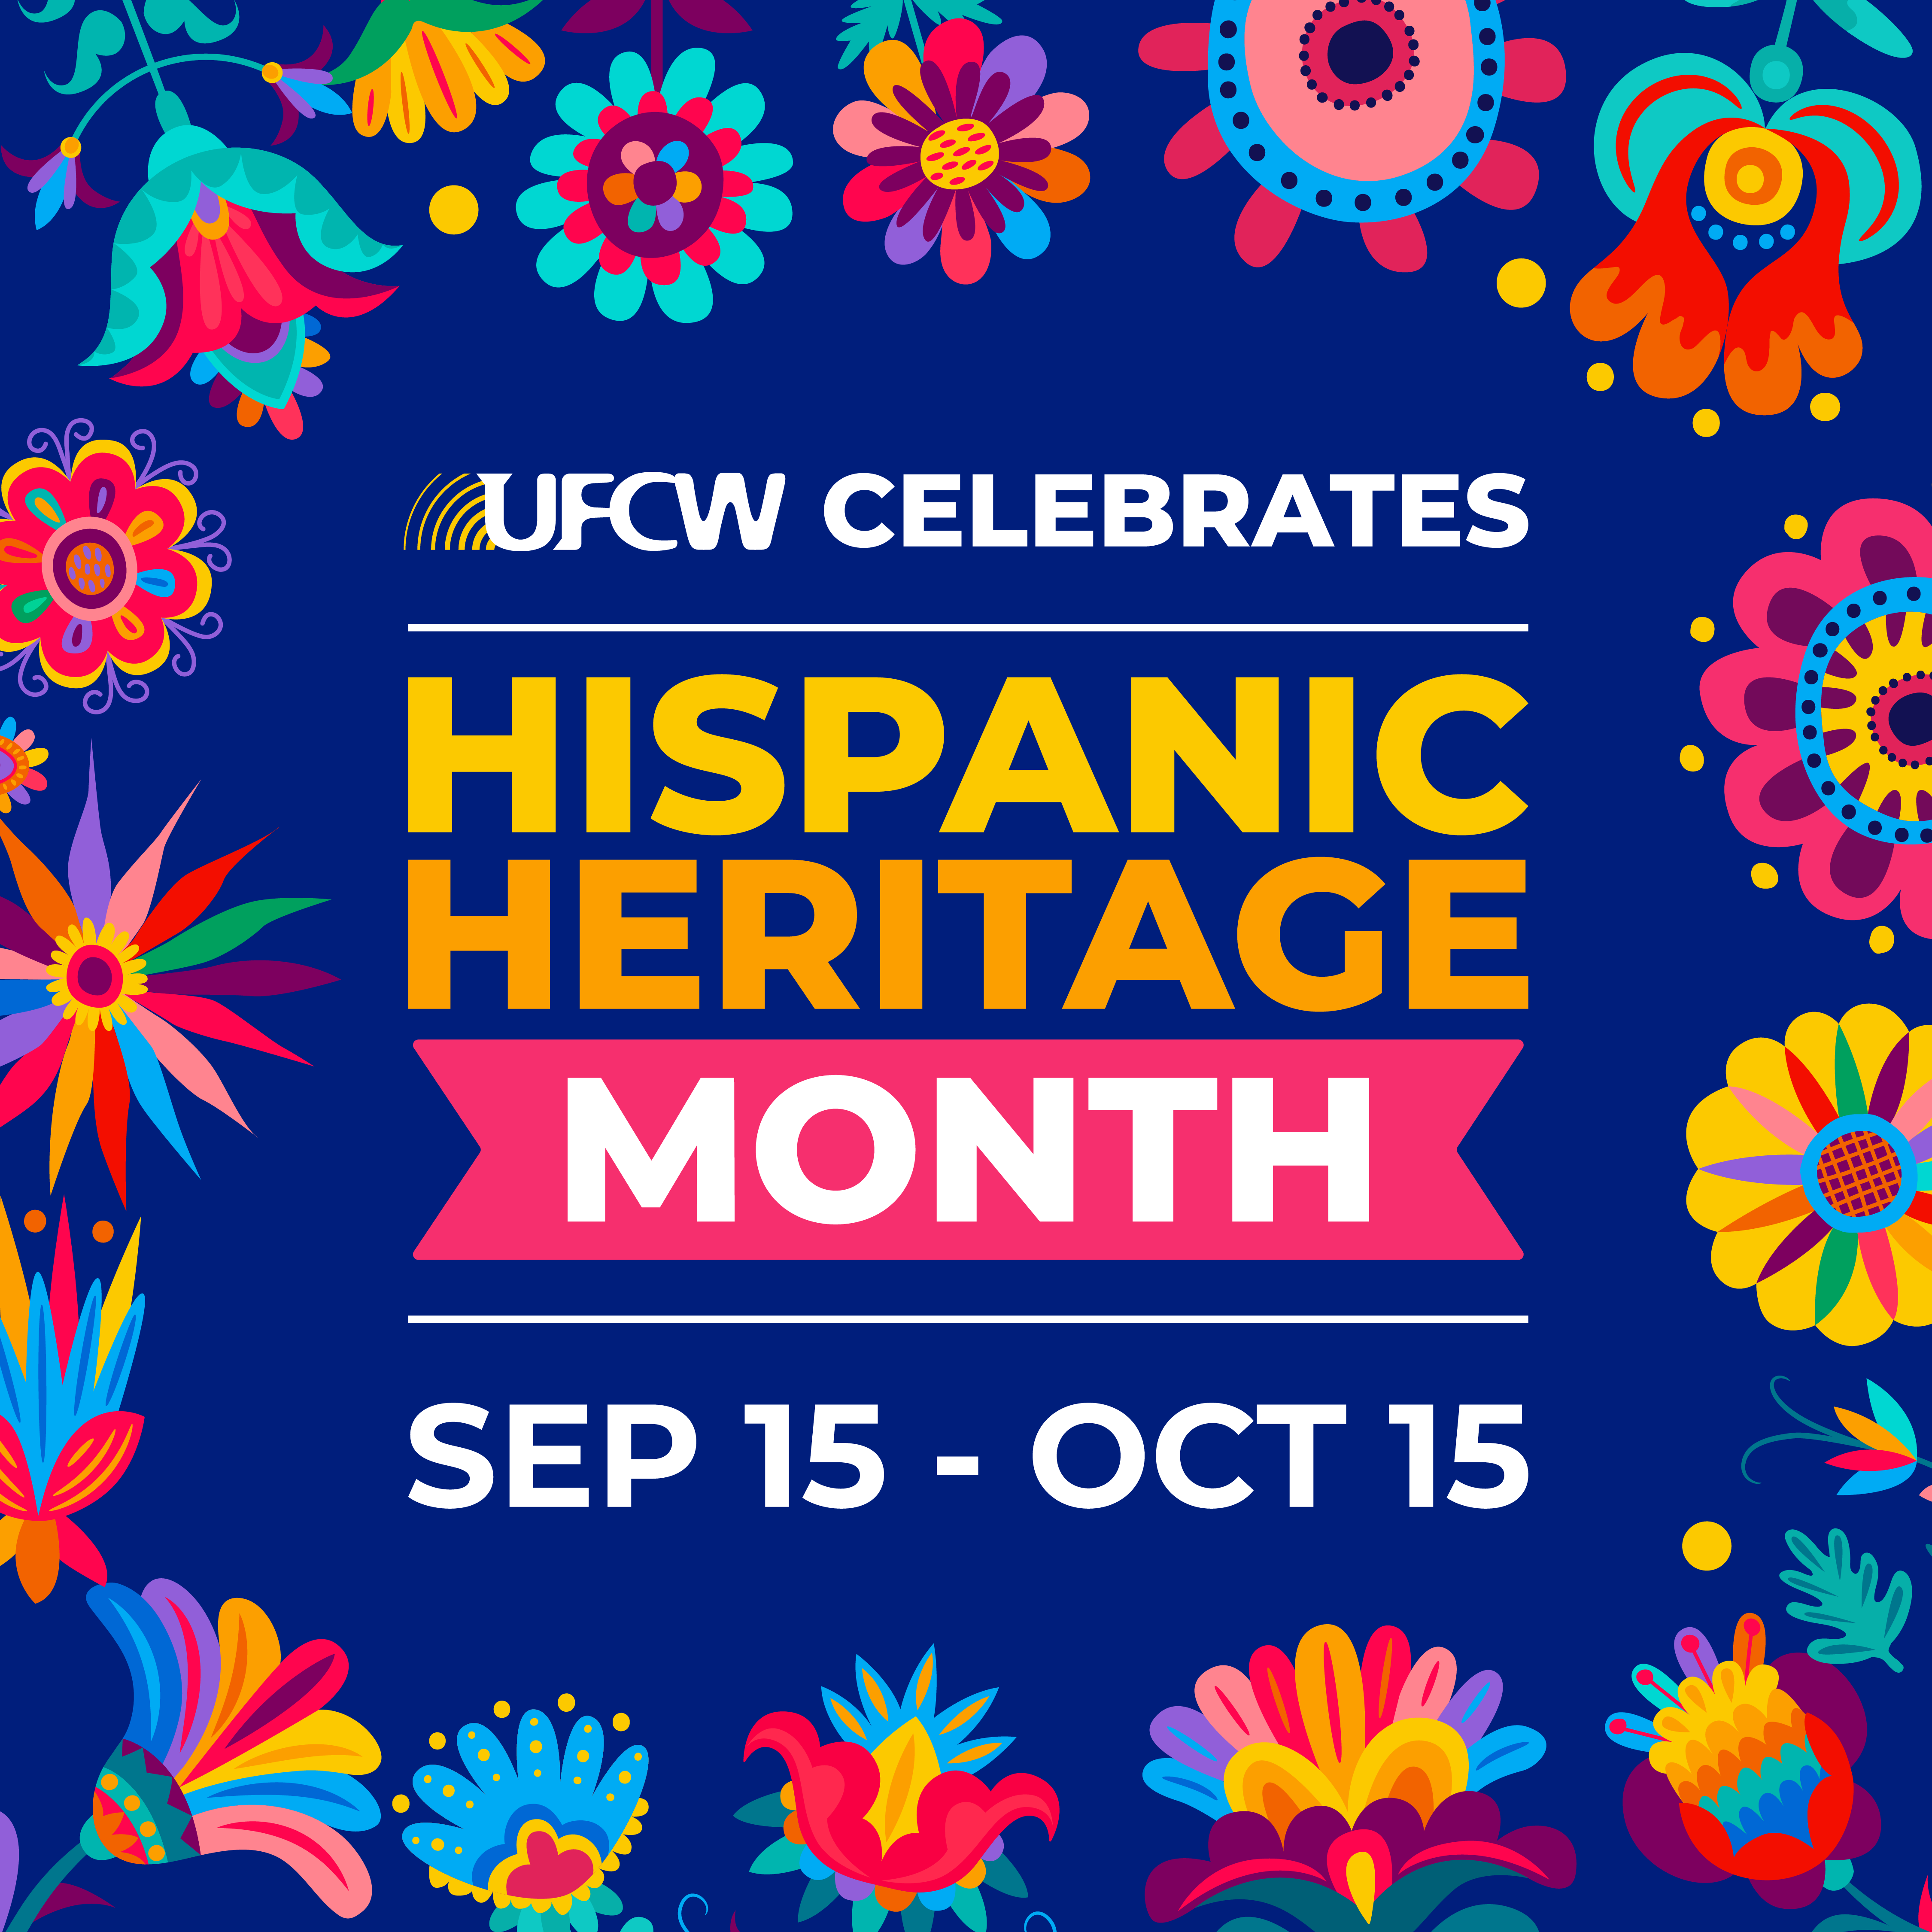 ufcw-celebrates-hispanic-heritage-month-for-local-unions